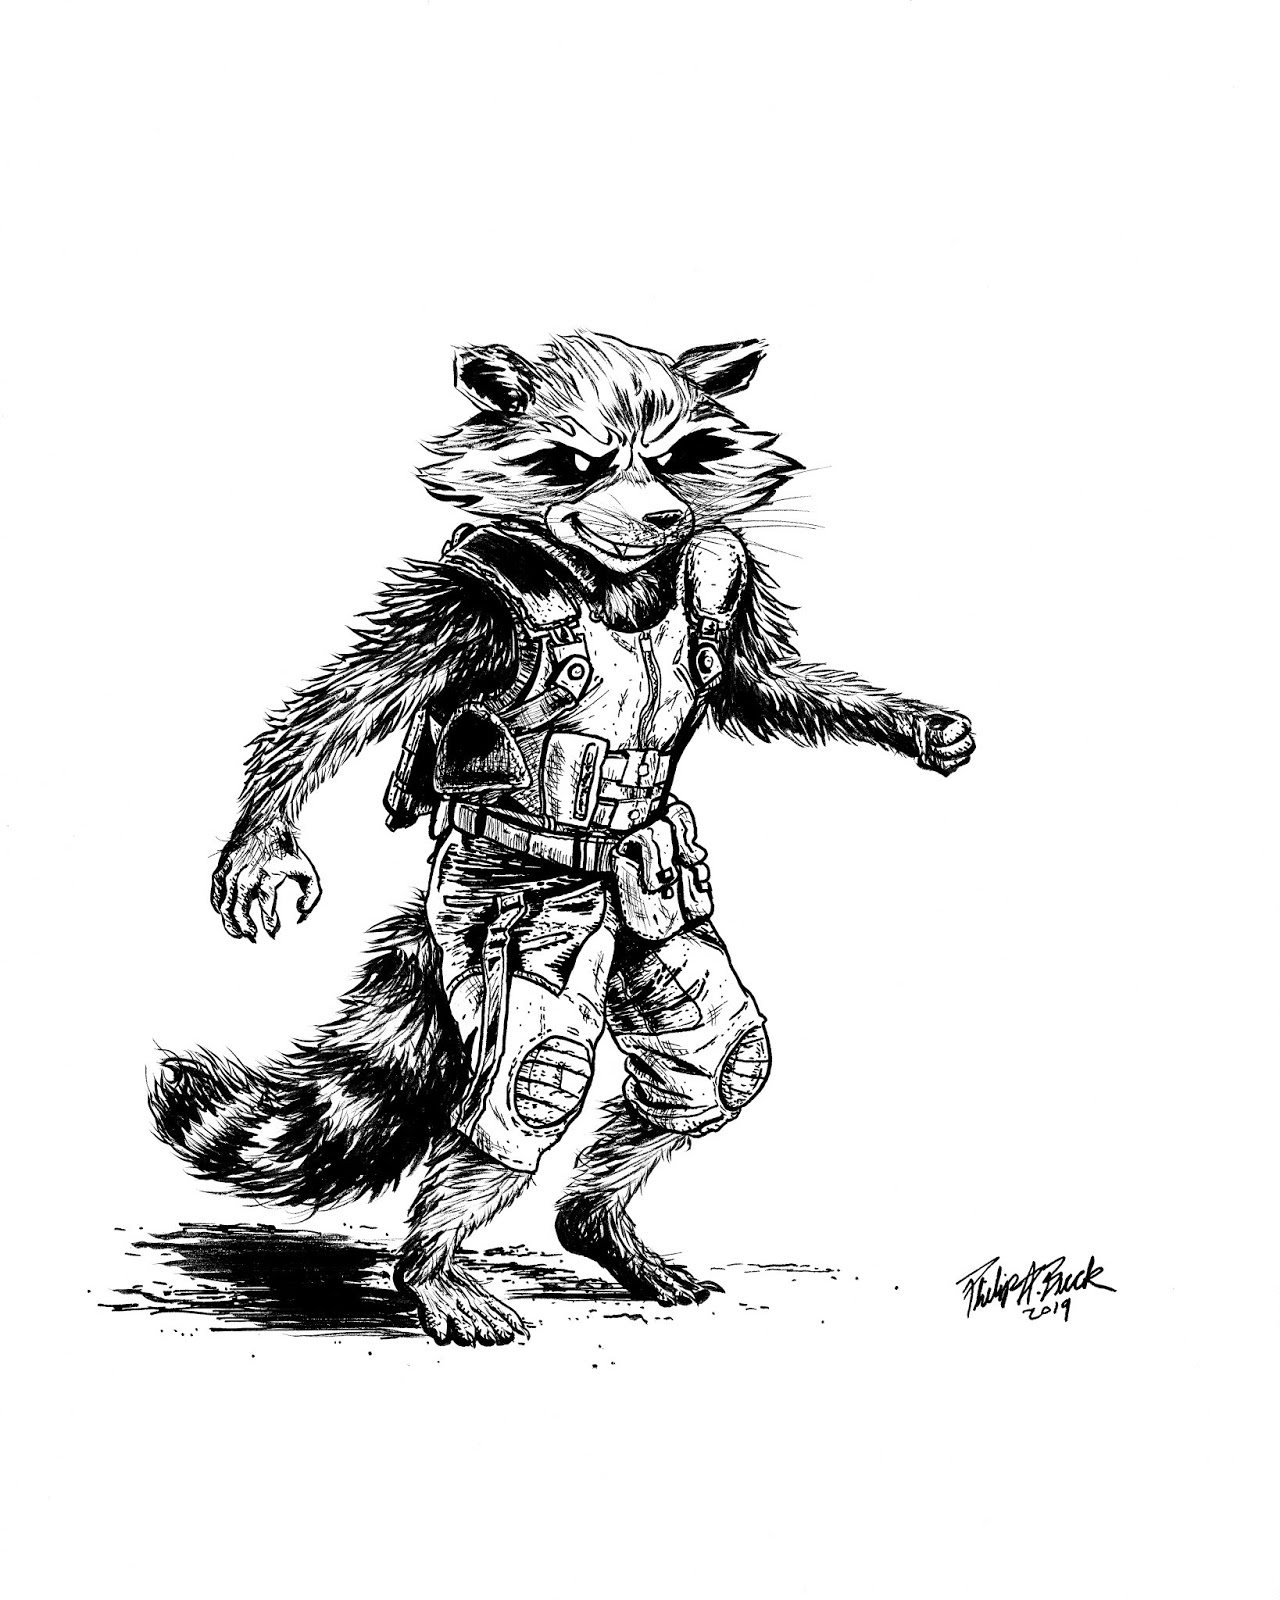 Rocket Raccoon and Groot Sketch by AJWensloff on DeviantArt